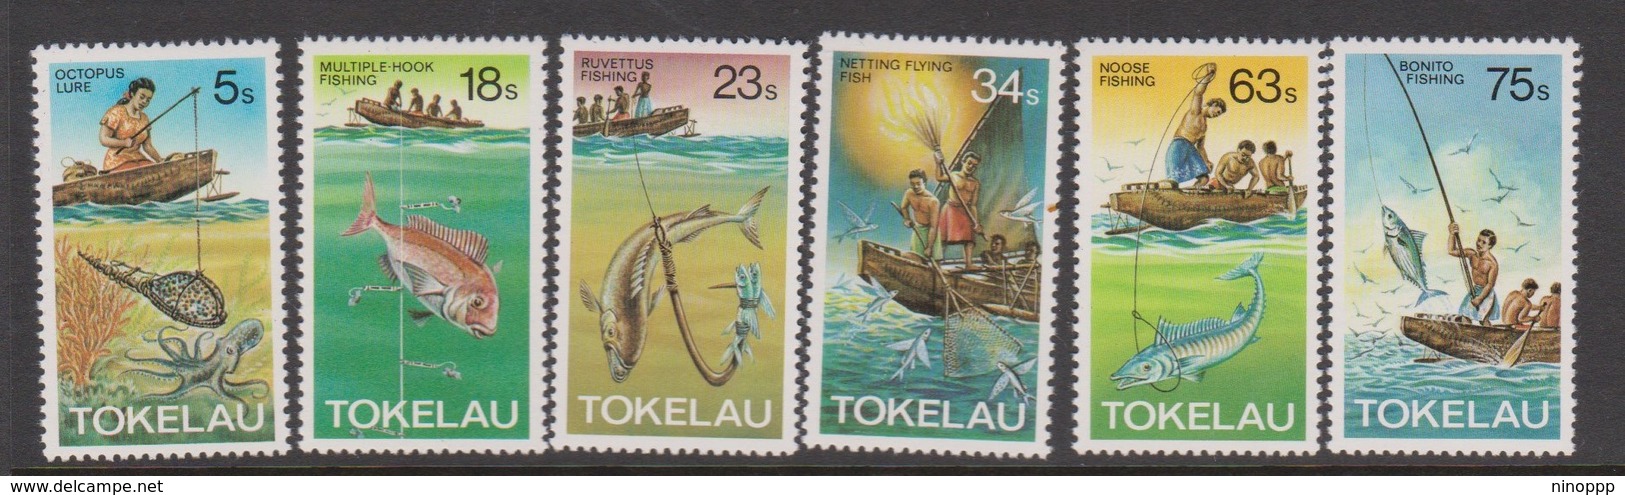 Tokelau SG 85-90 1982 Fishing Mwthods,mint Never Hinged - Tokelau